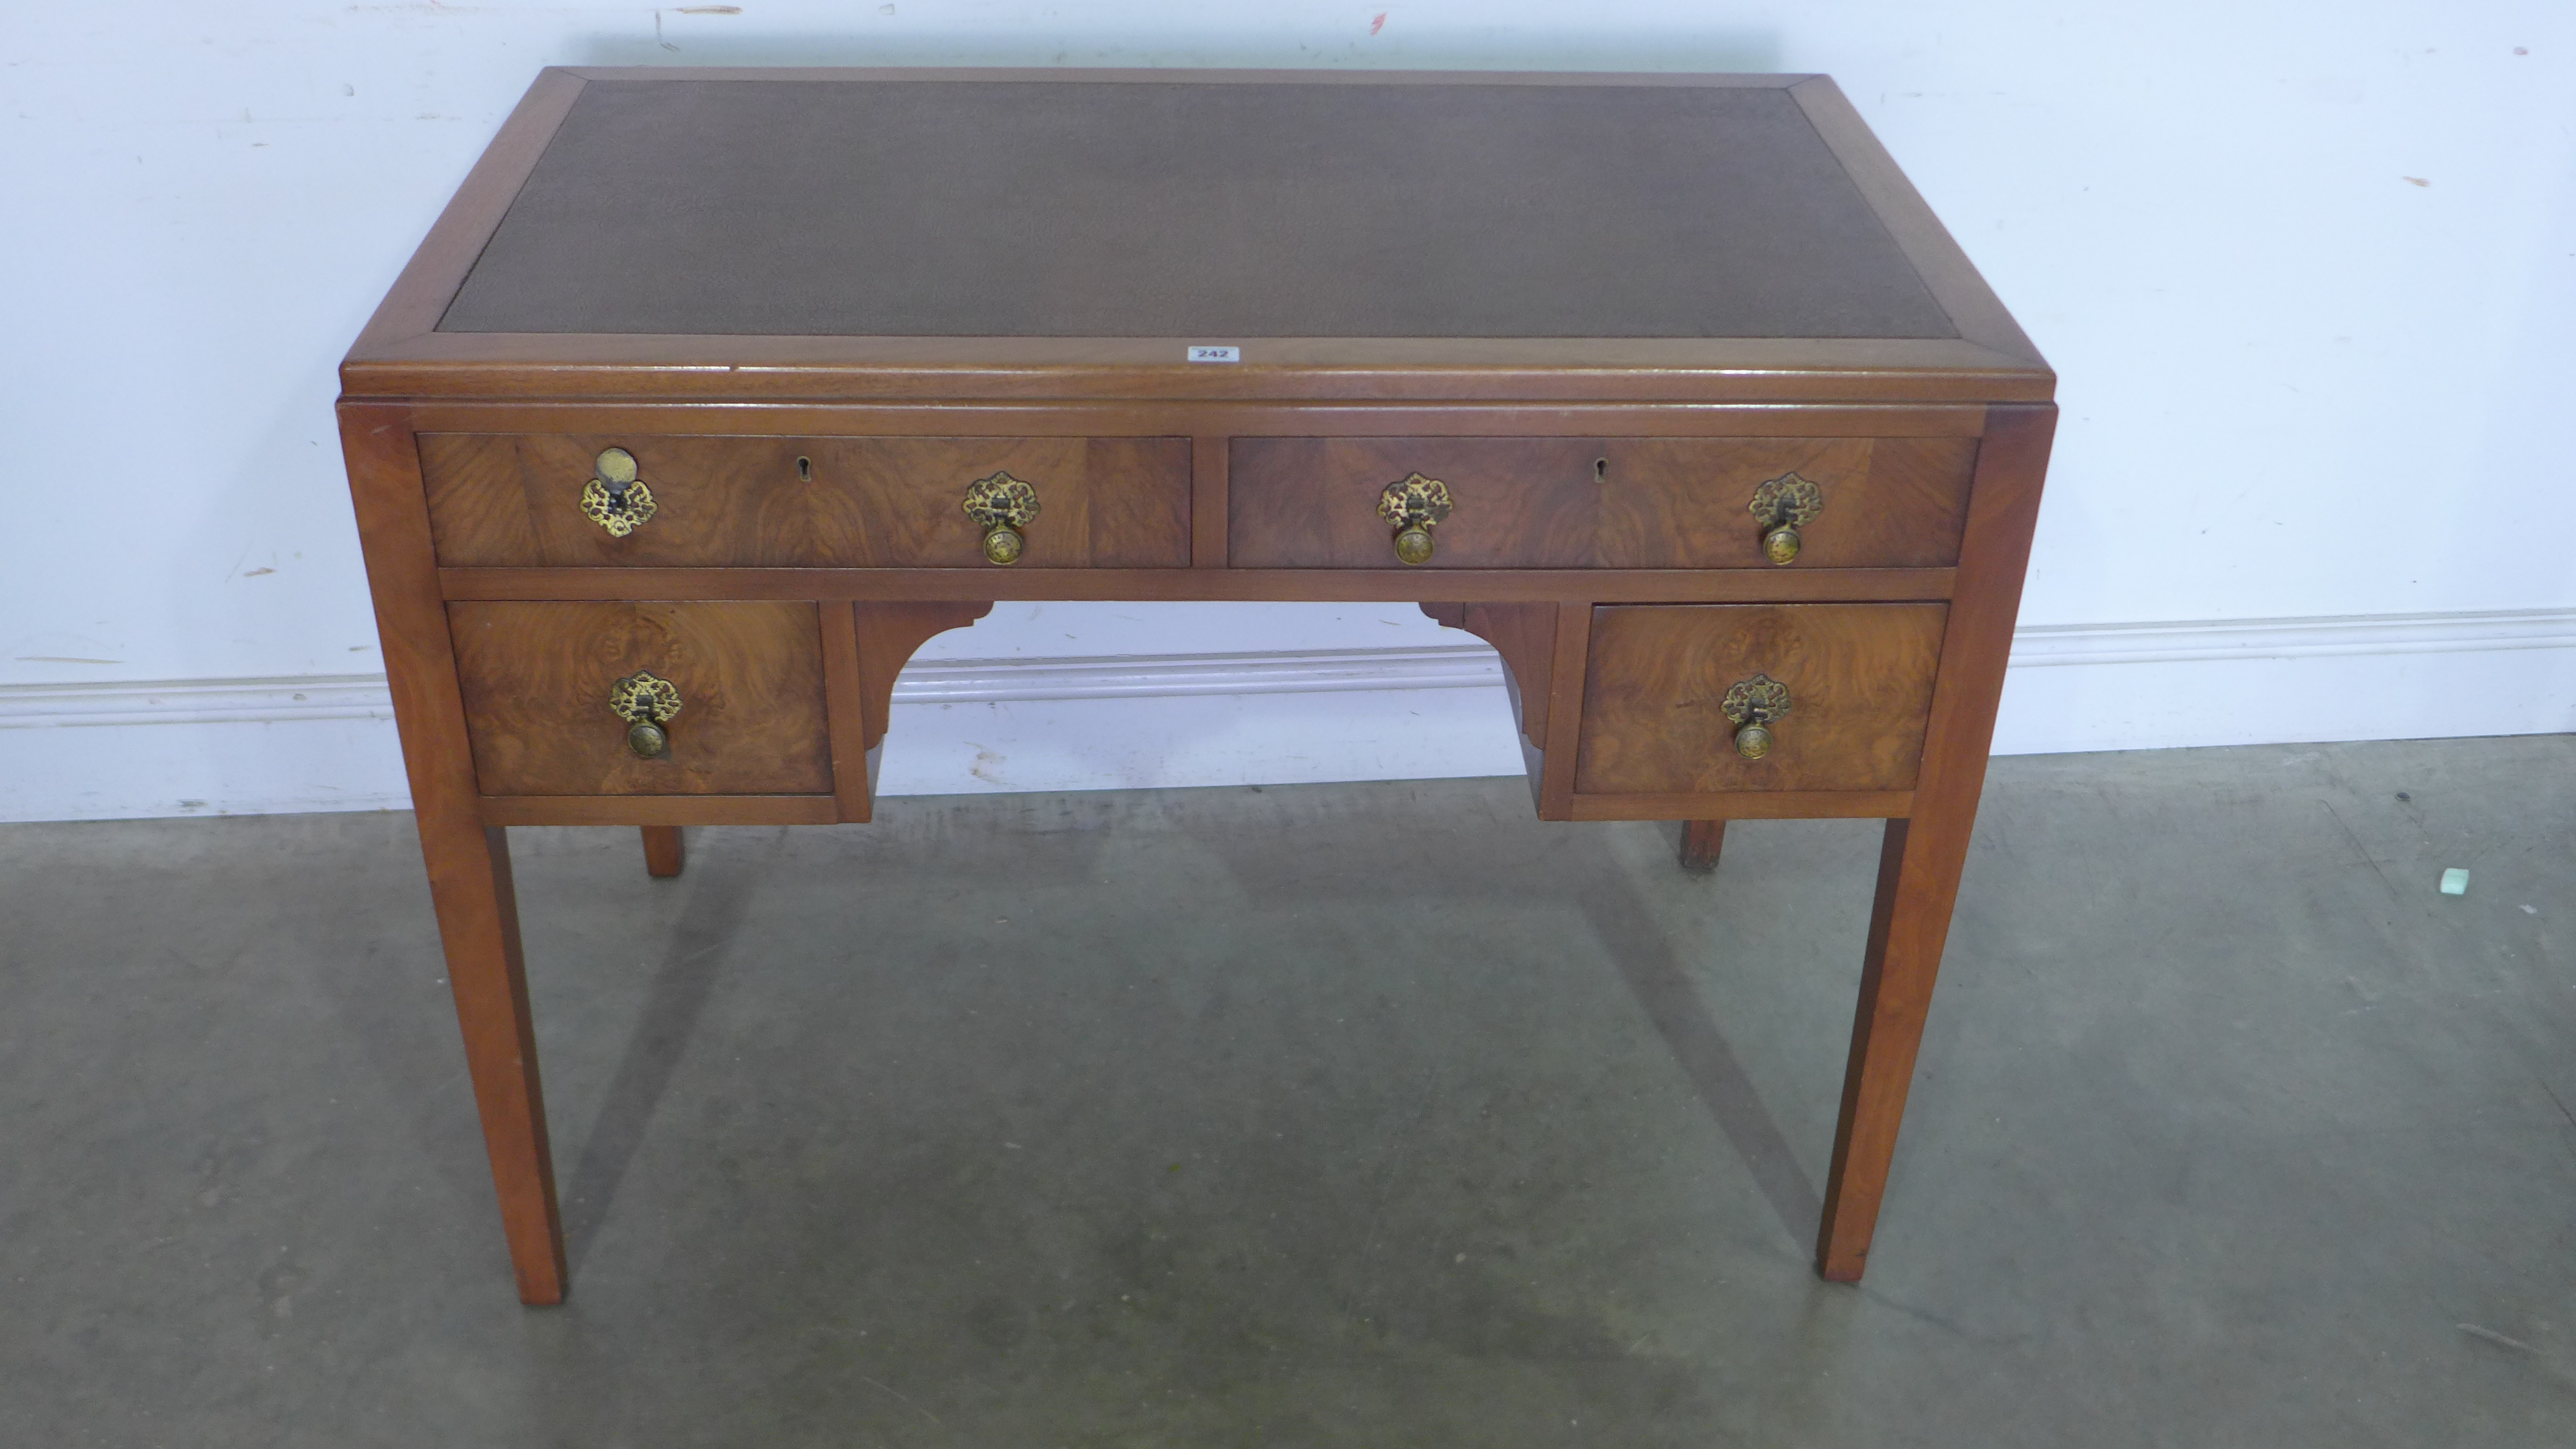 A 1930's walnut desk with five drawers - 79cm x 106cm x 60cm - Image 2 of 2